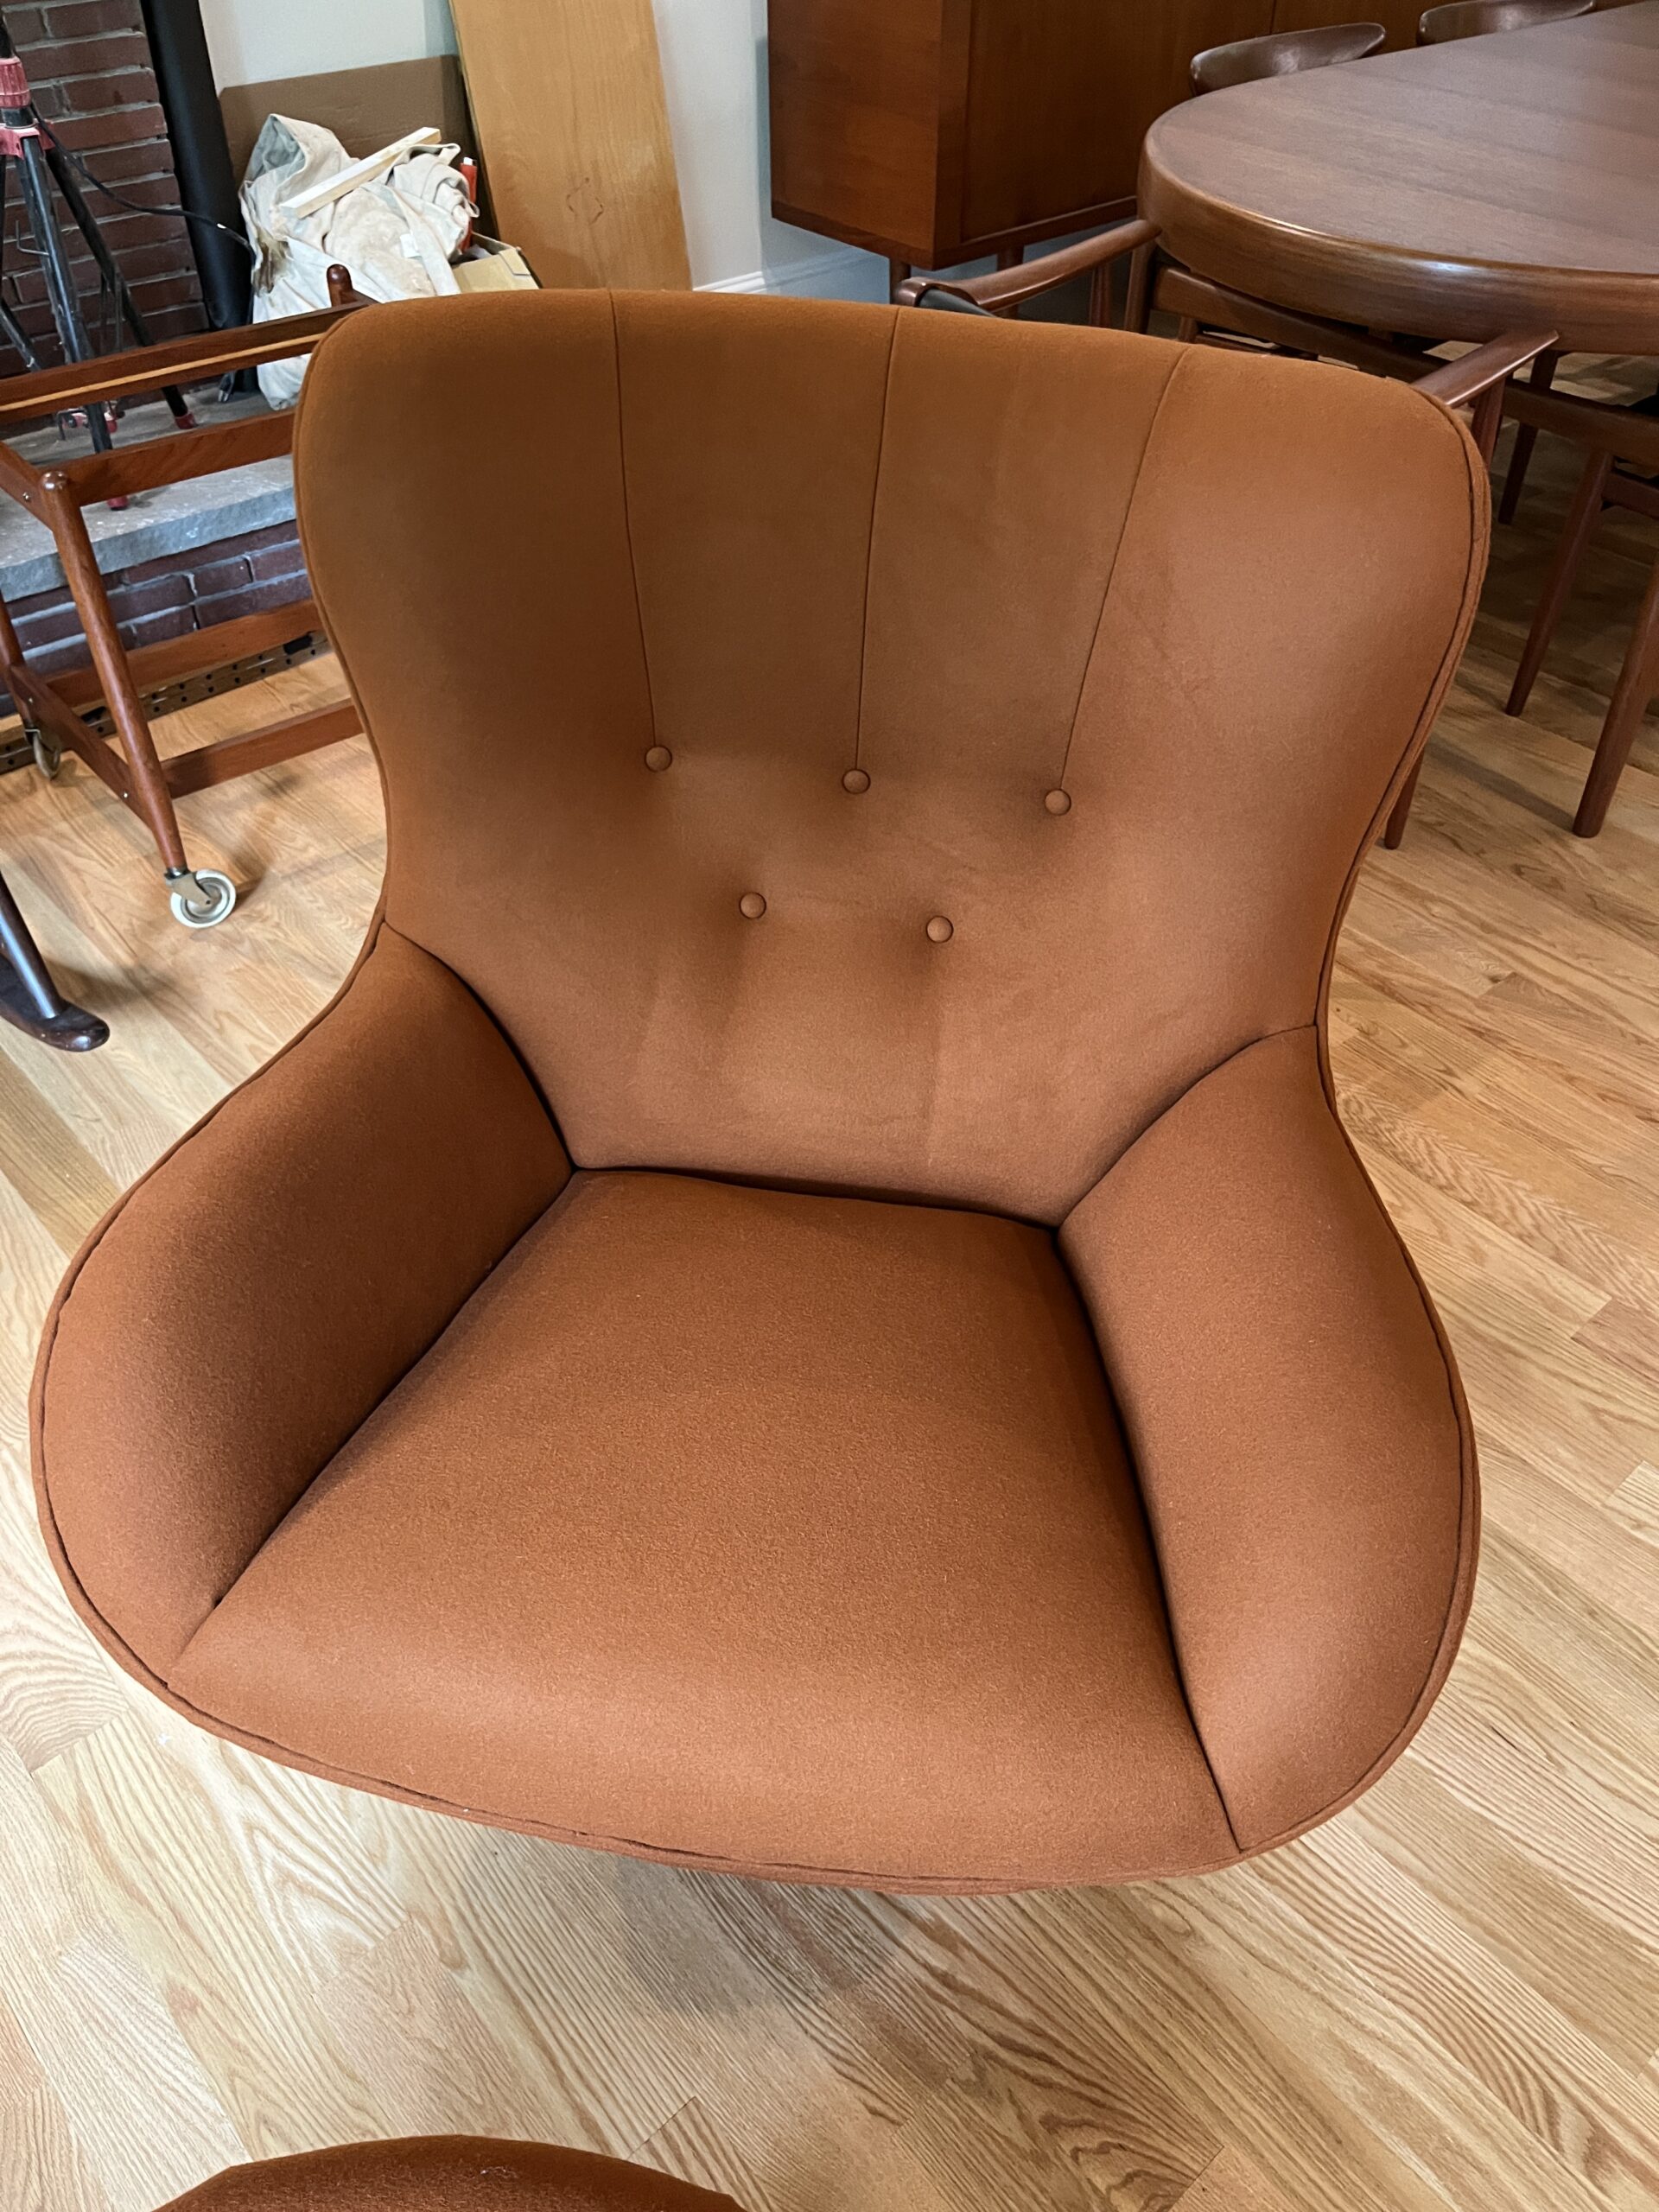 Orange chair - after